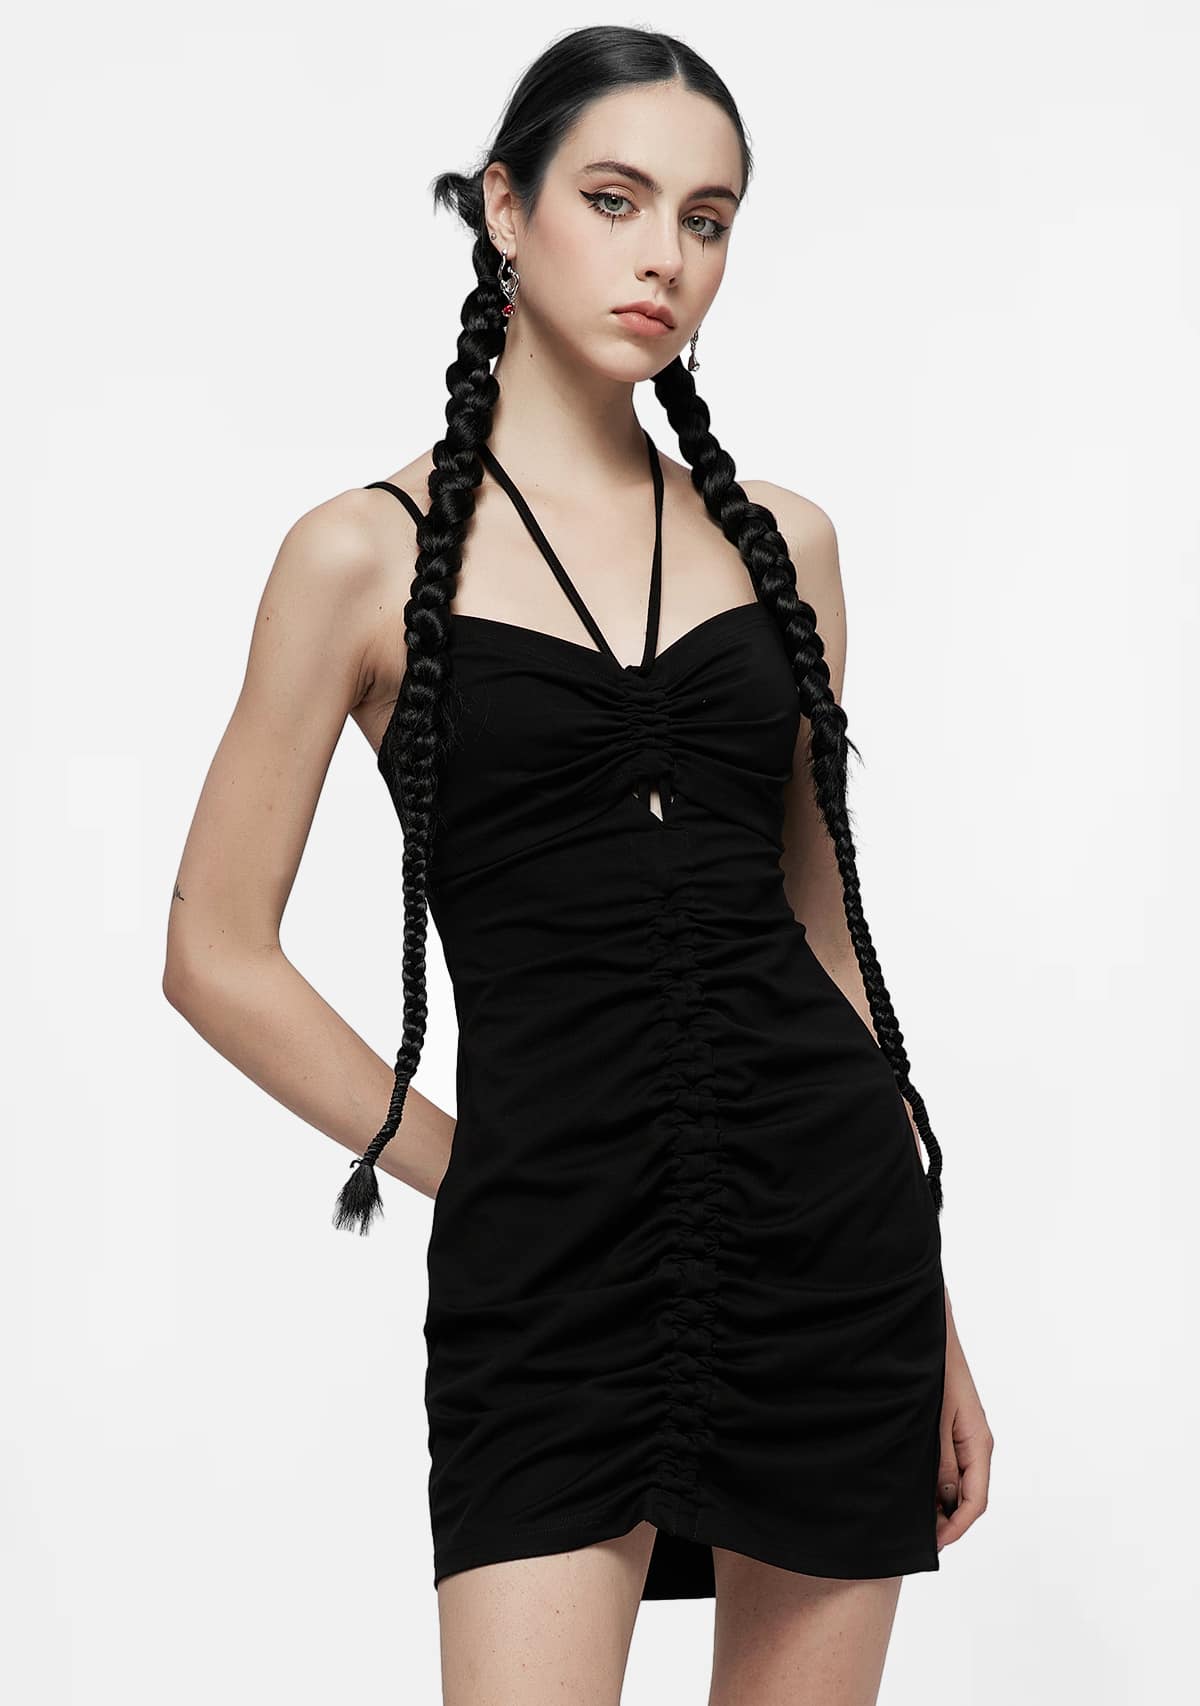 Chic Black Gothic Cocktail Dress